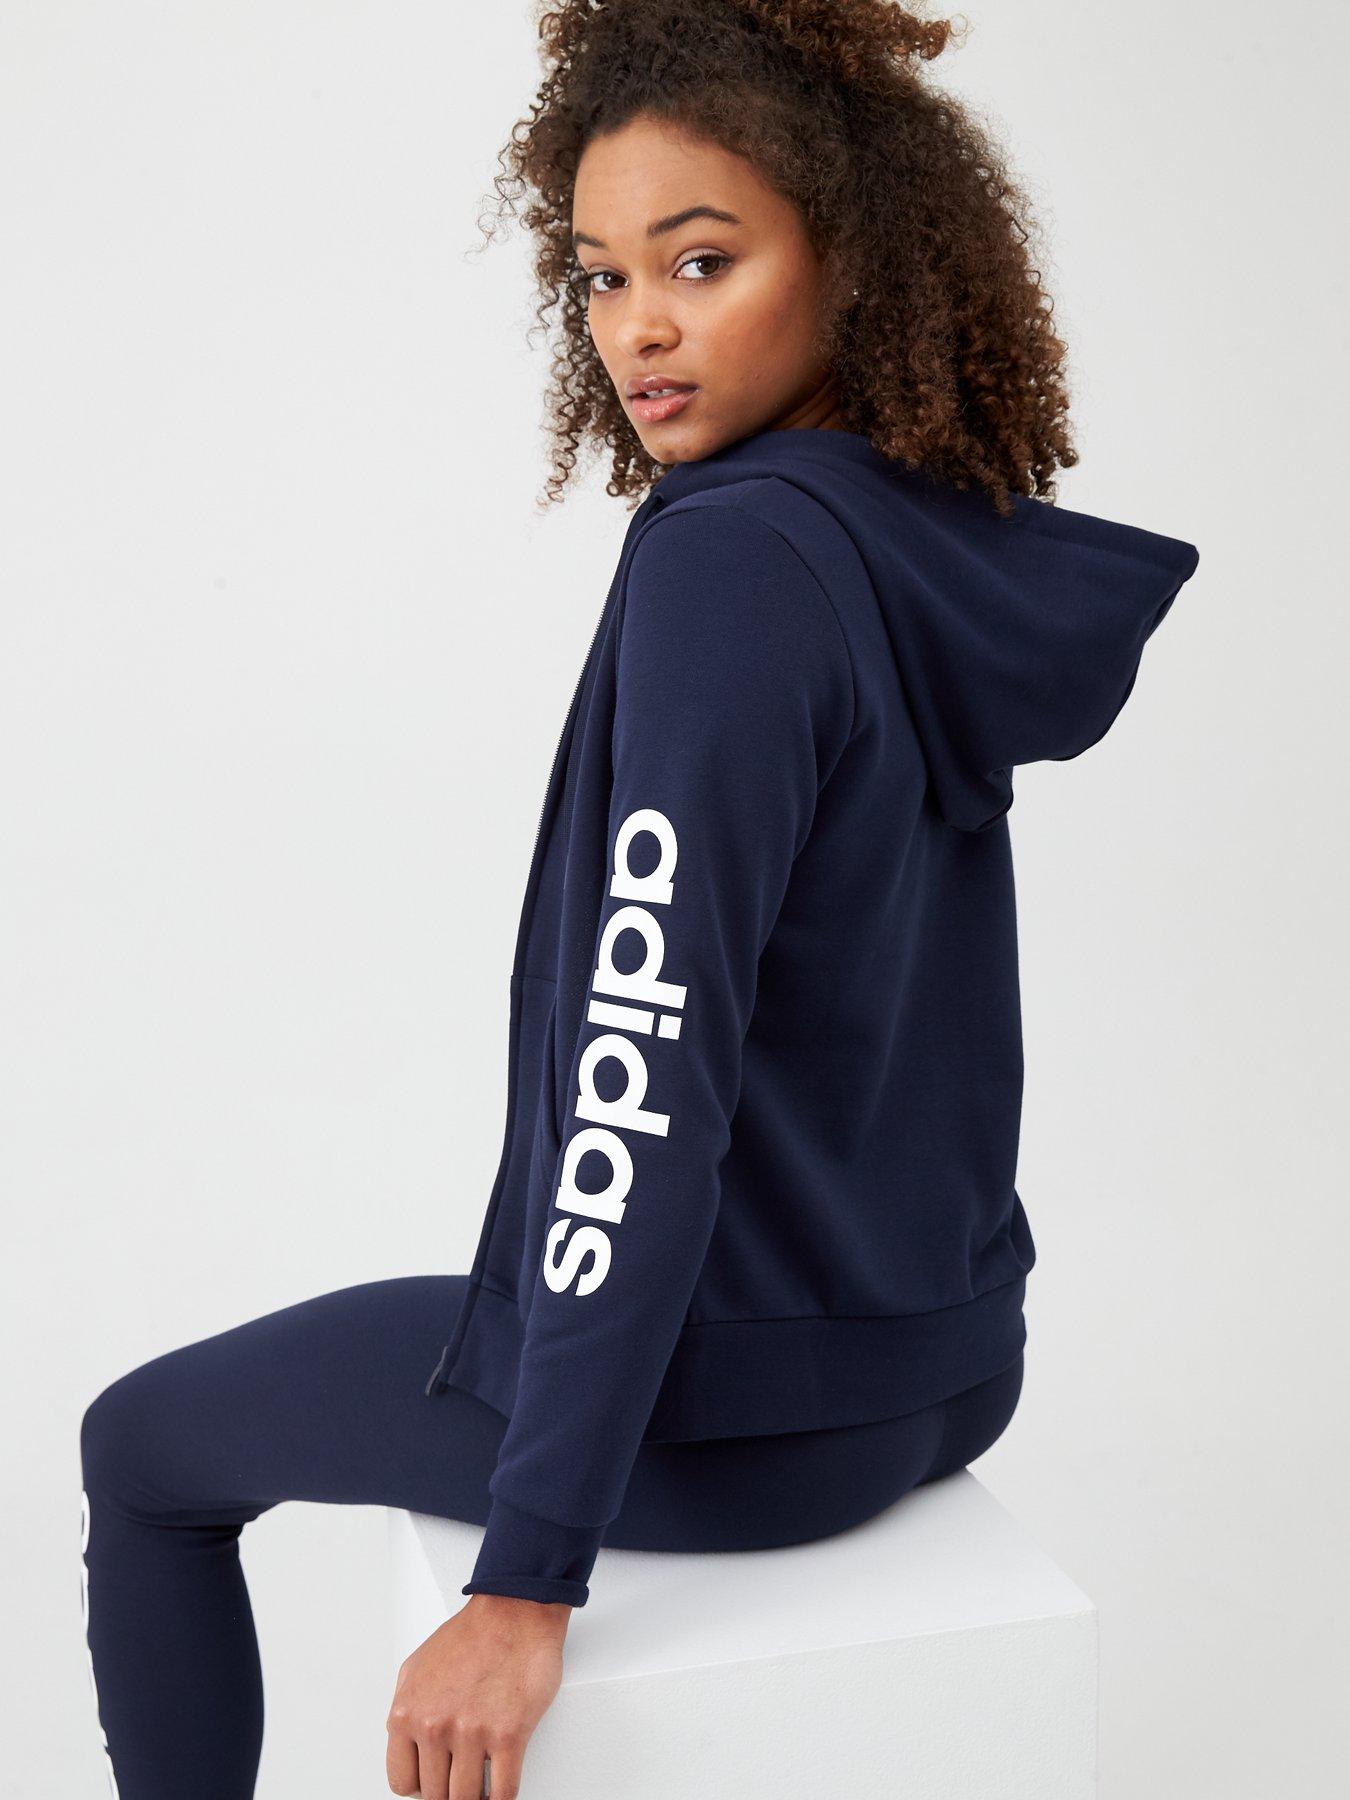 adidas women's essentials linear full zip hoodie